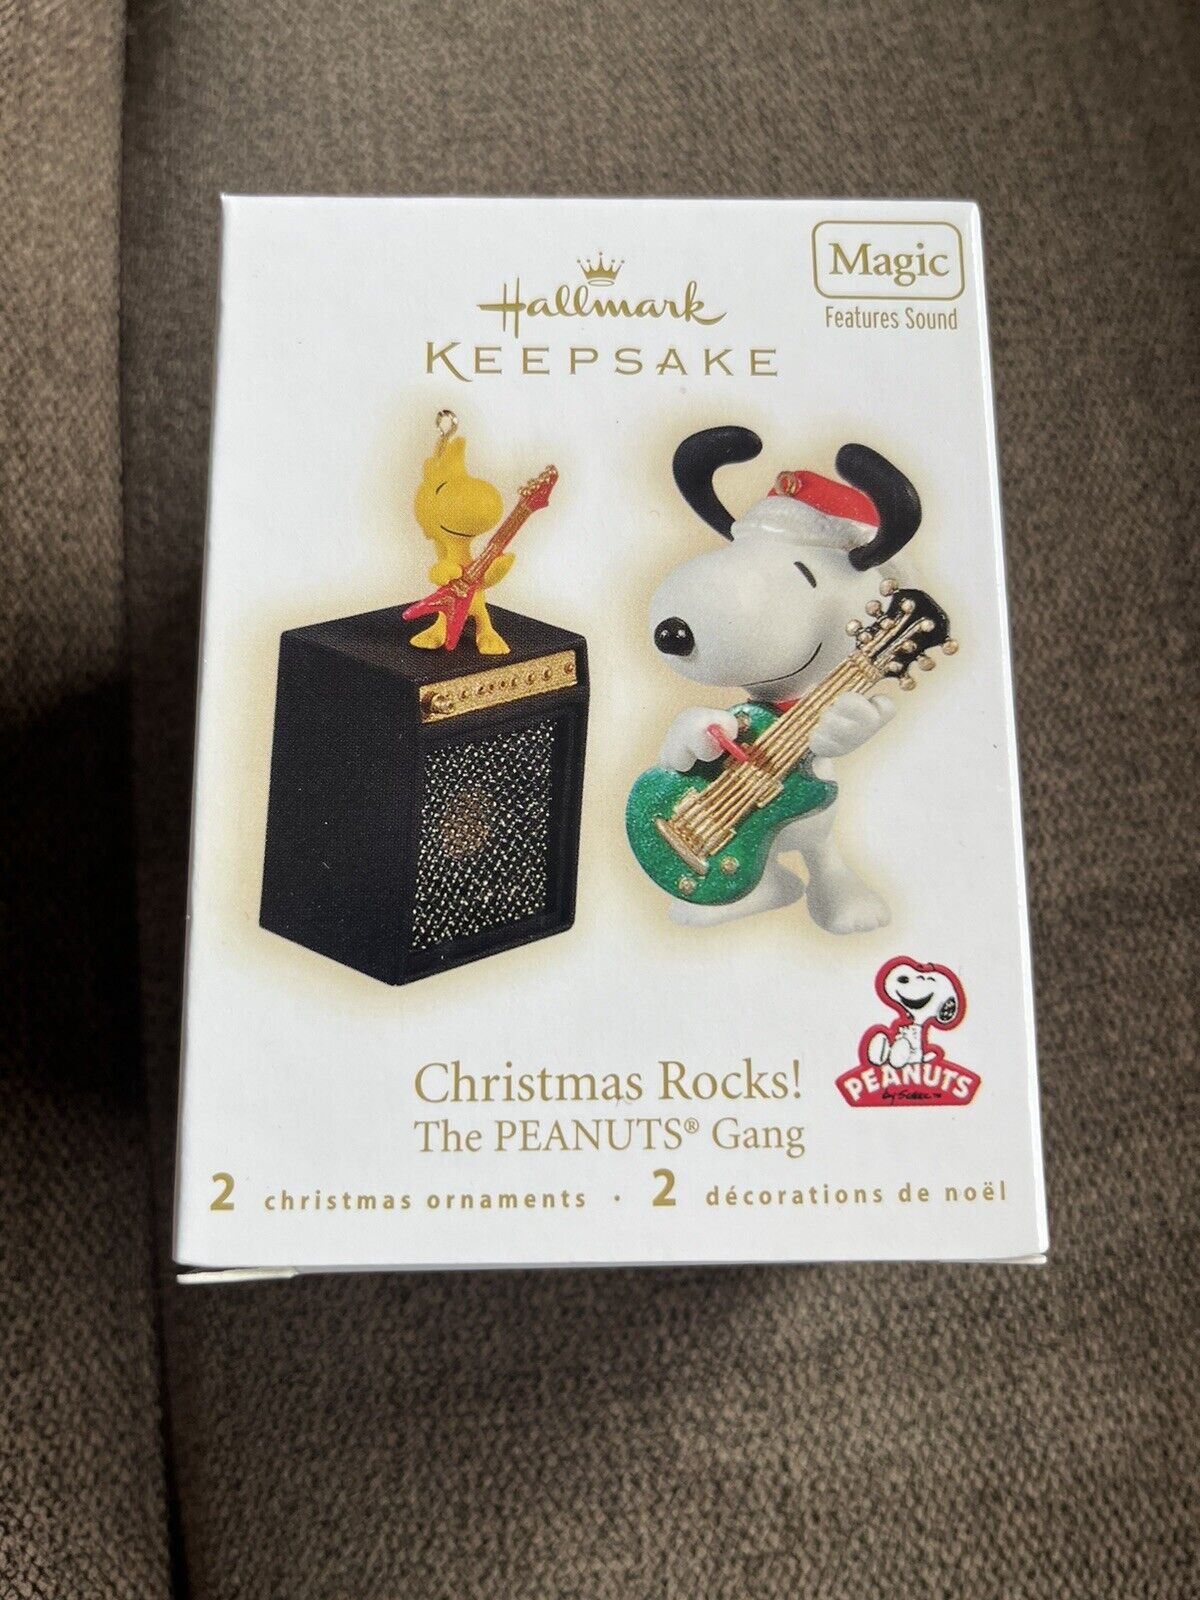 2009 Hallmark Keepsake “Christmas Rocks”Ornaments Magic Sound The Peanuts Gang